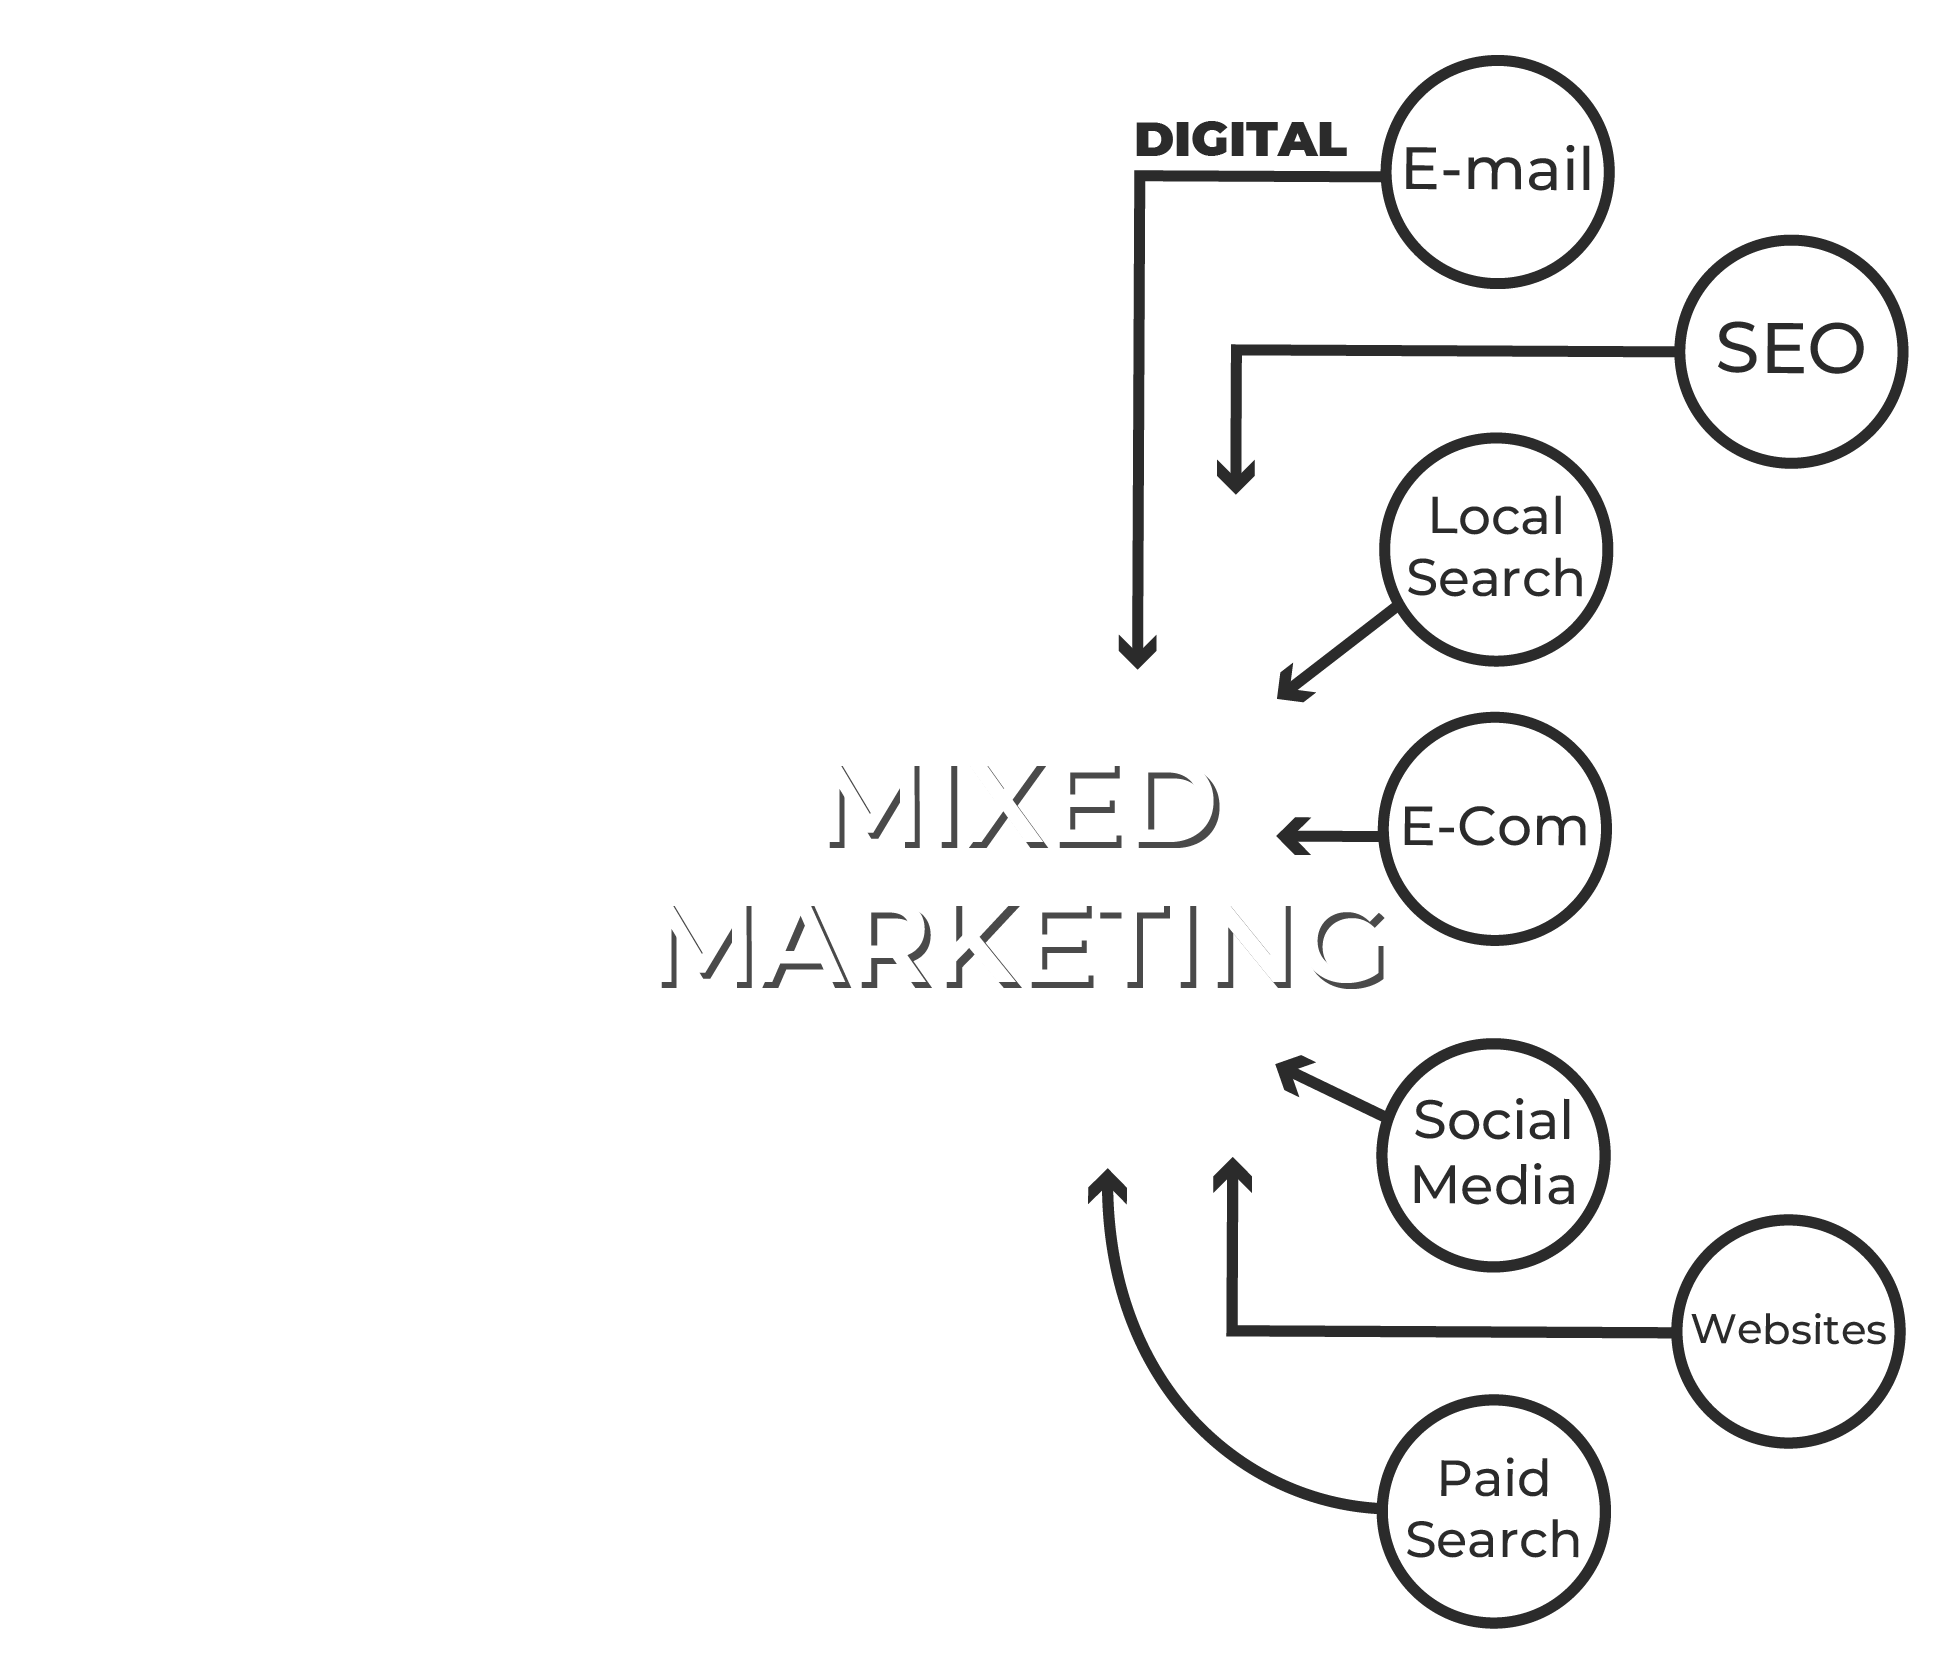 Mixed Marketing graphic